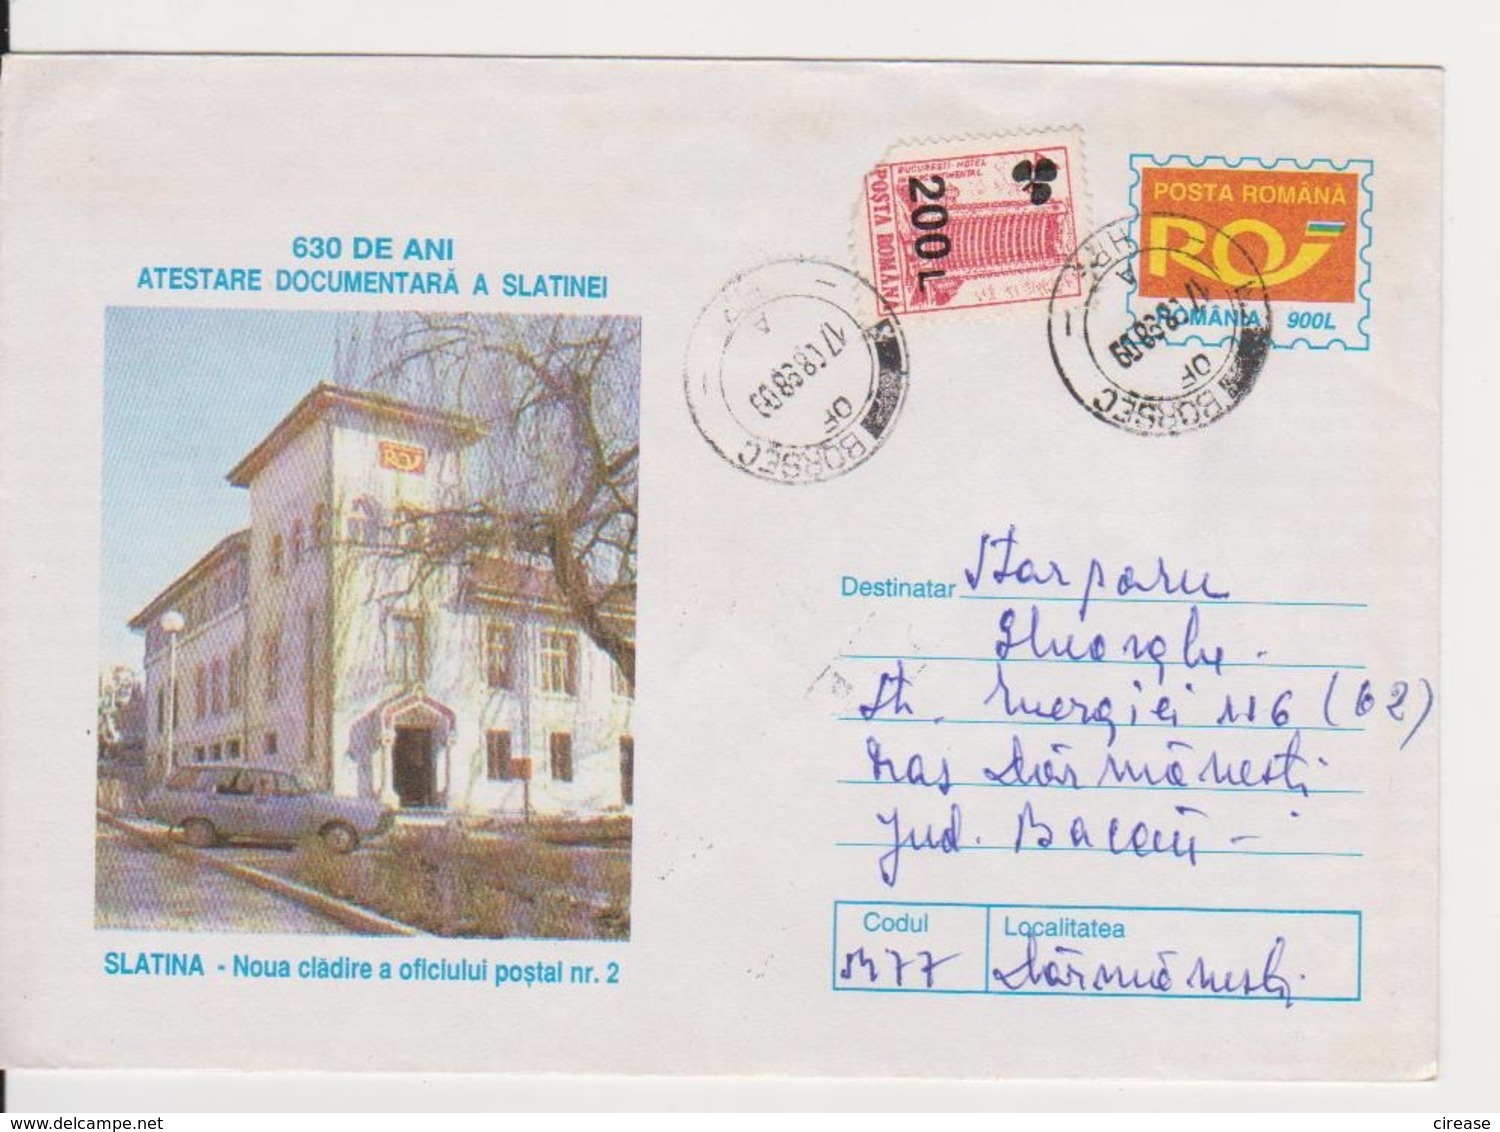 SLATINA POSTAL OFFICE, ROMANIA STATIONERY - Post